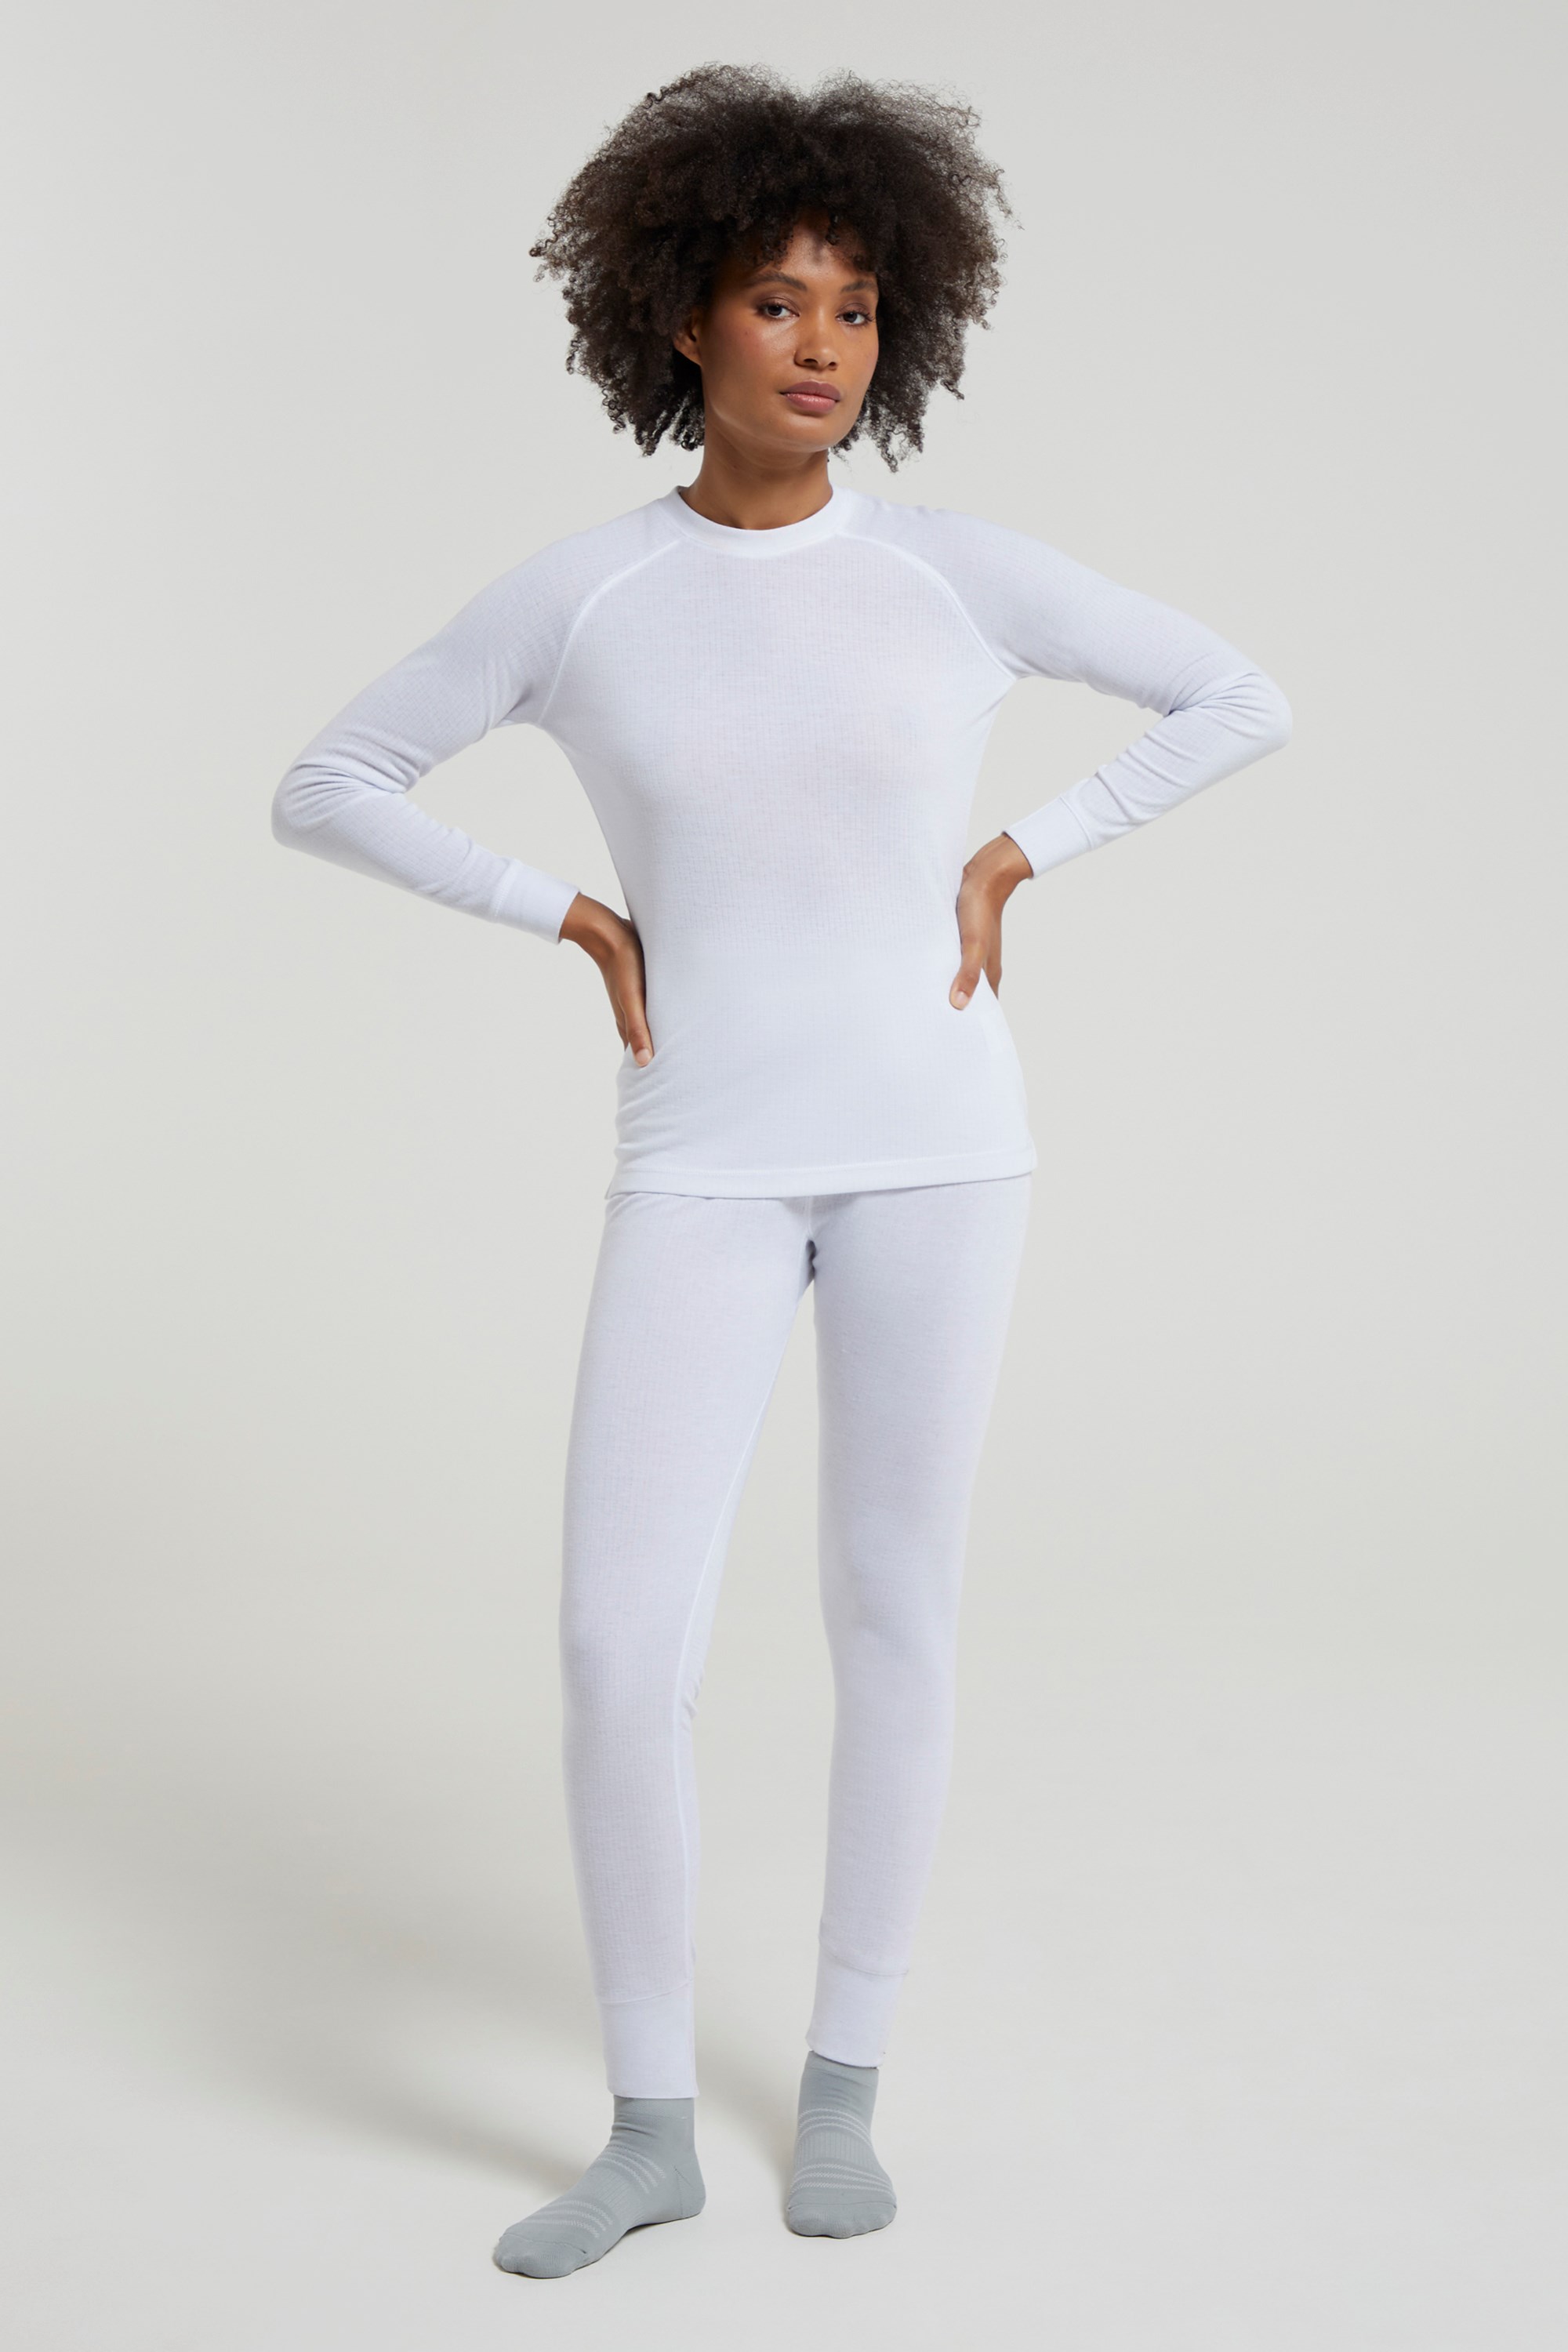 Womens Thermal Underwear Set Top & Bottom Sport Ski Base Layer Long Johns  Suit